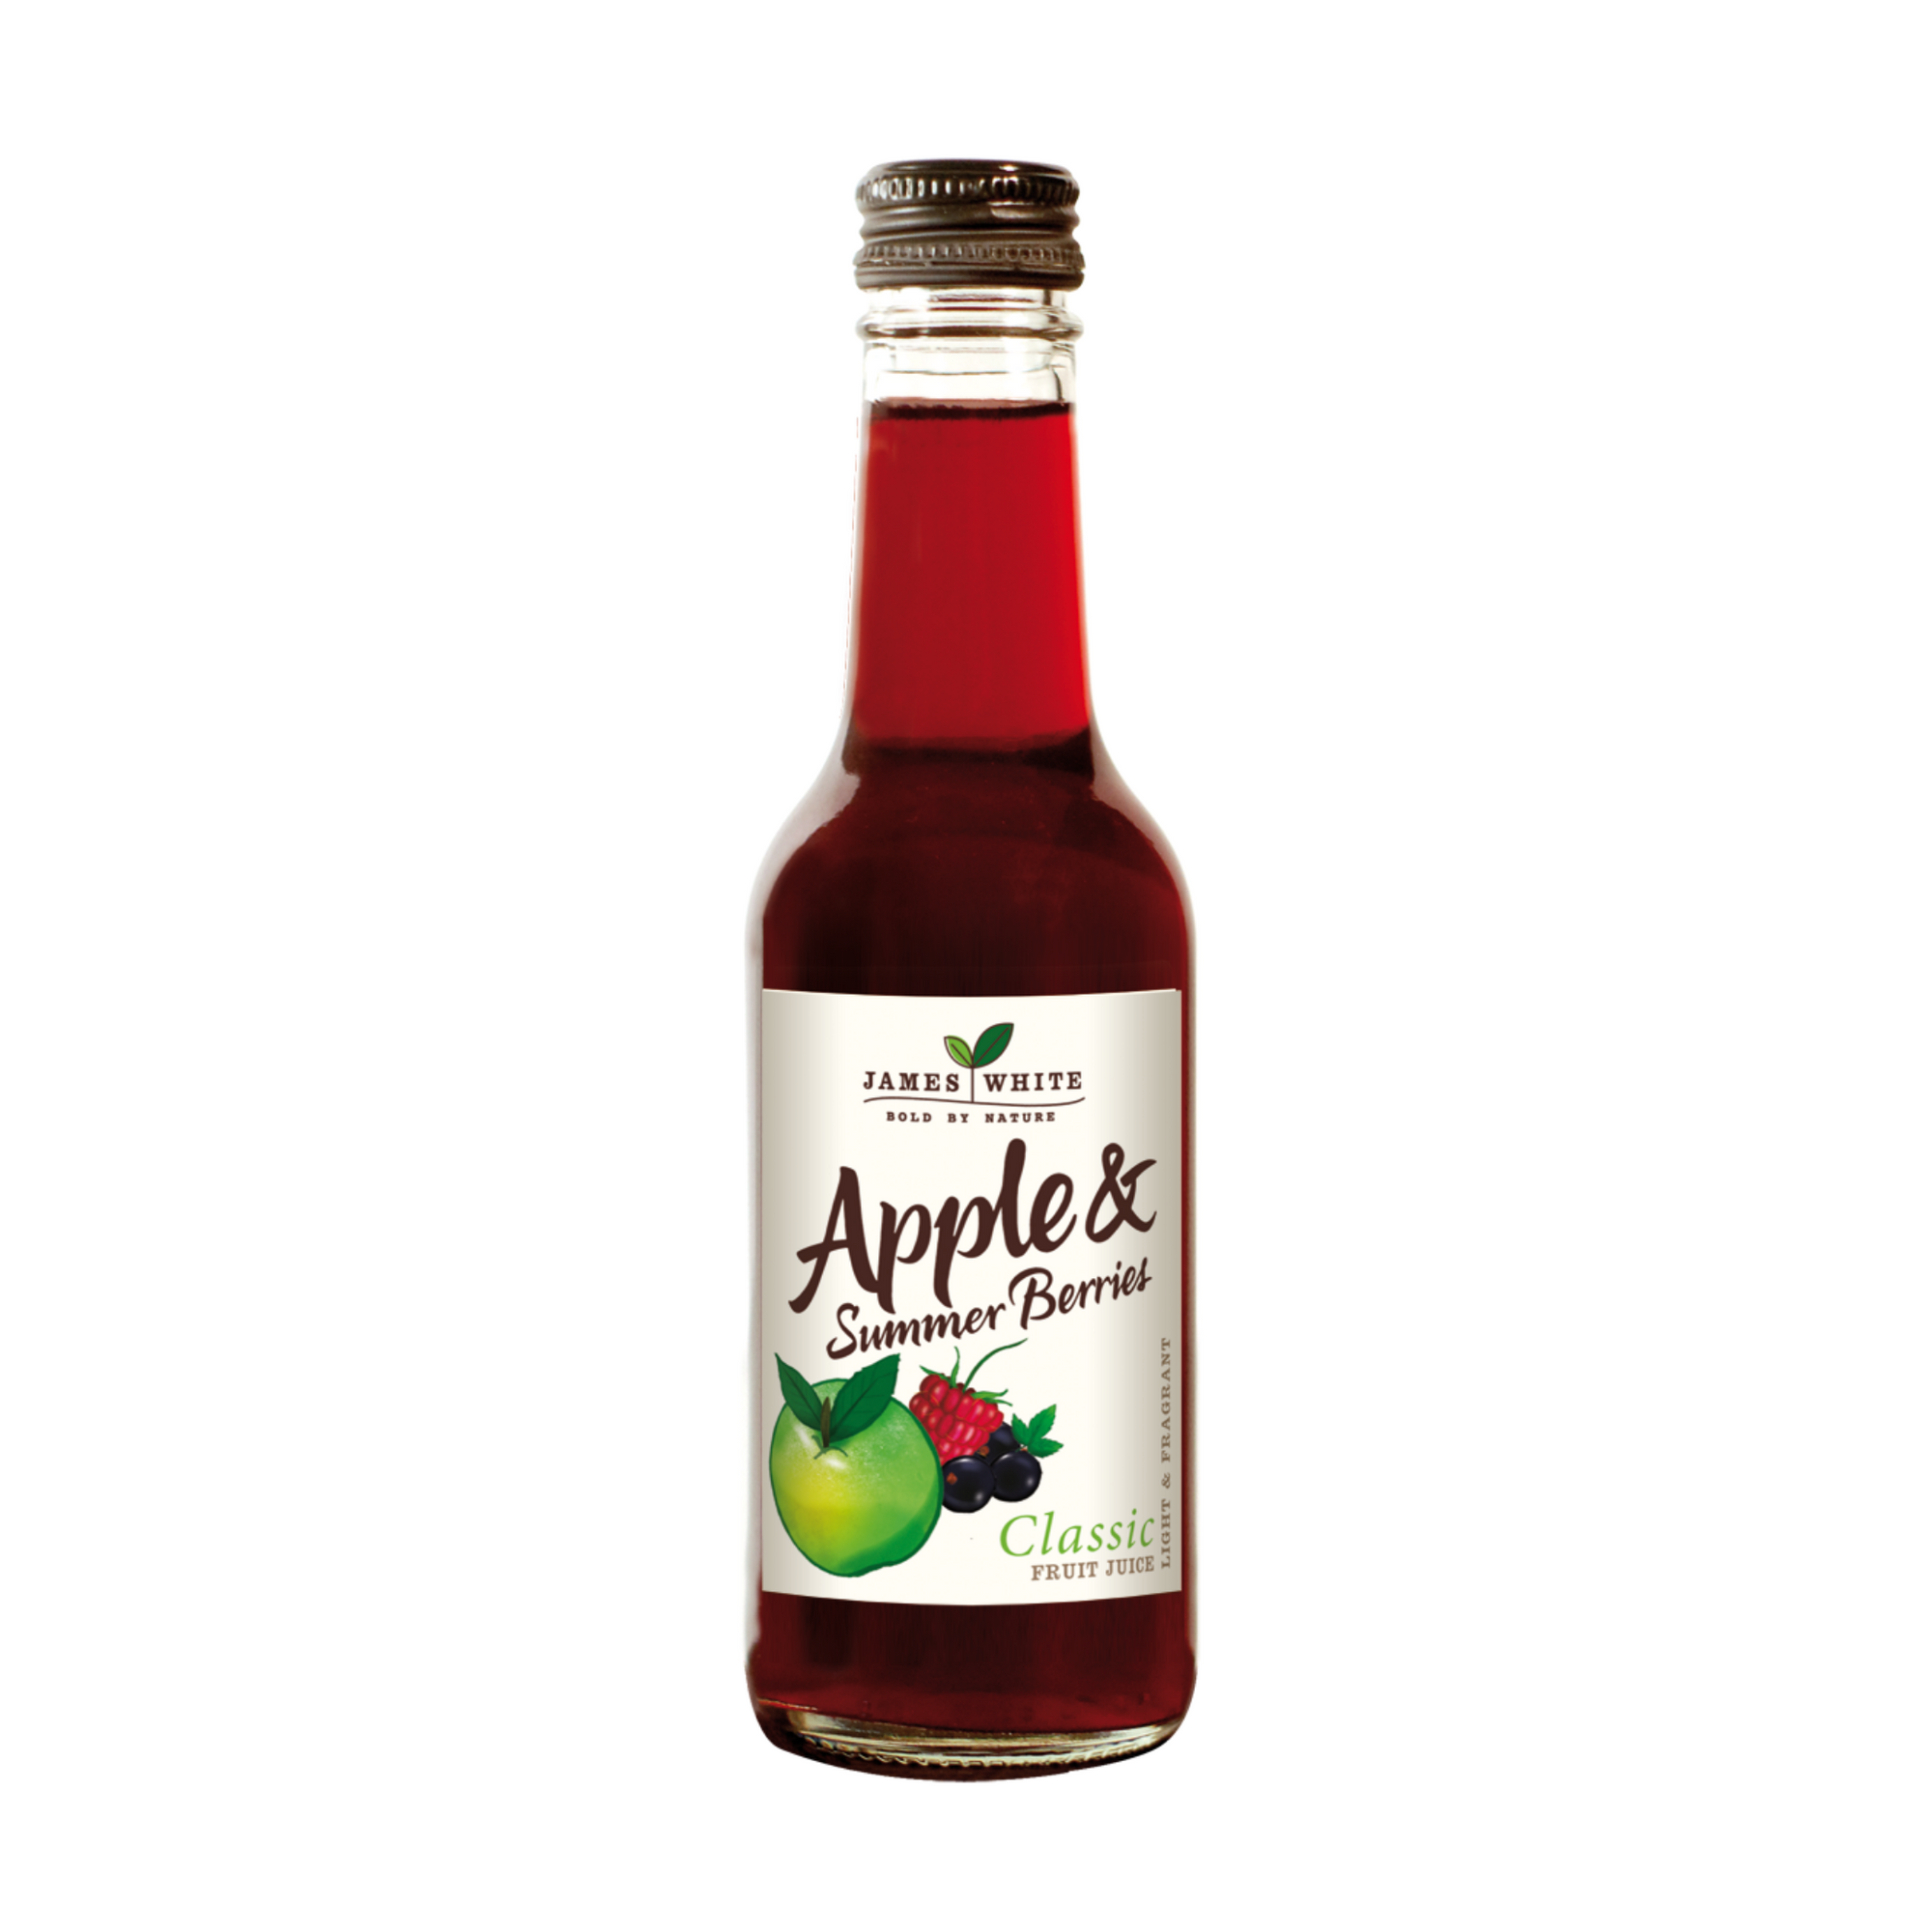 JW Apple & Summer Berries Juice